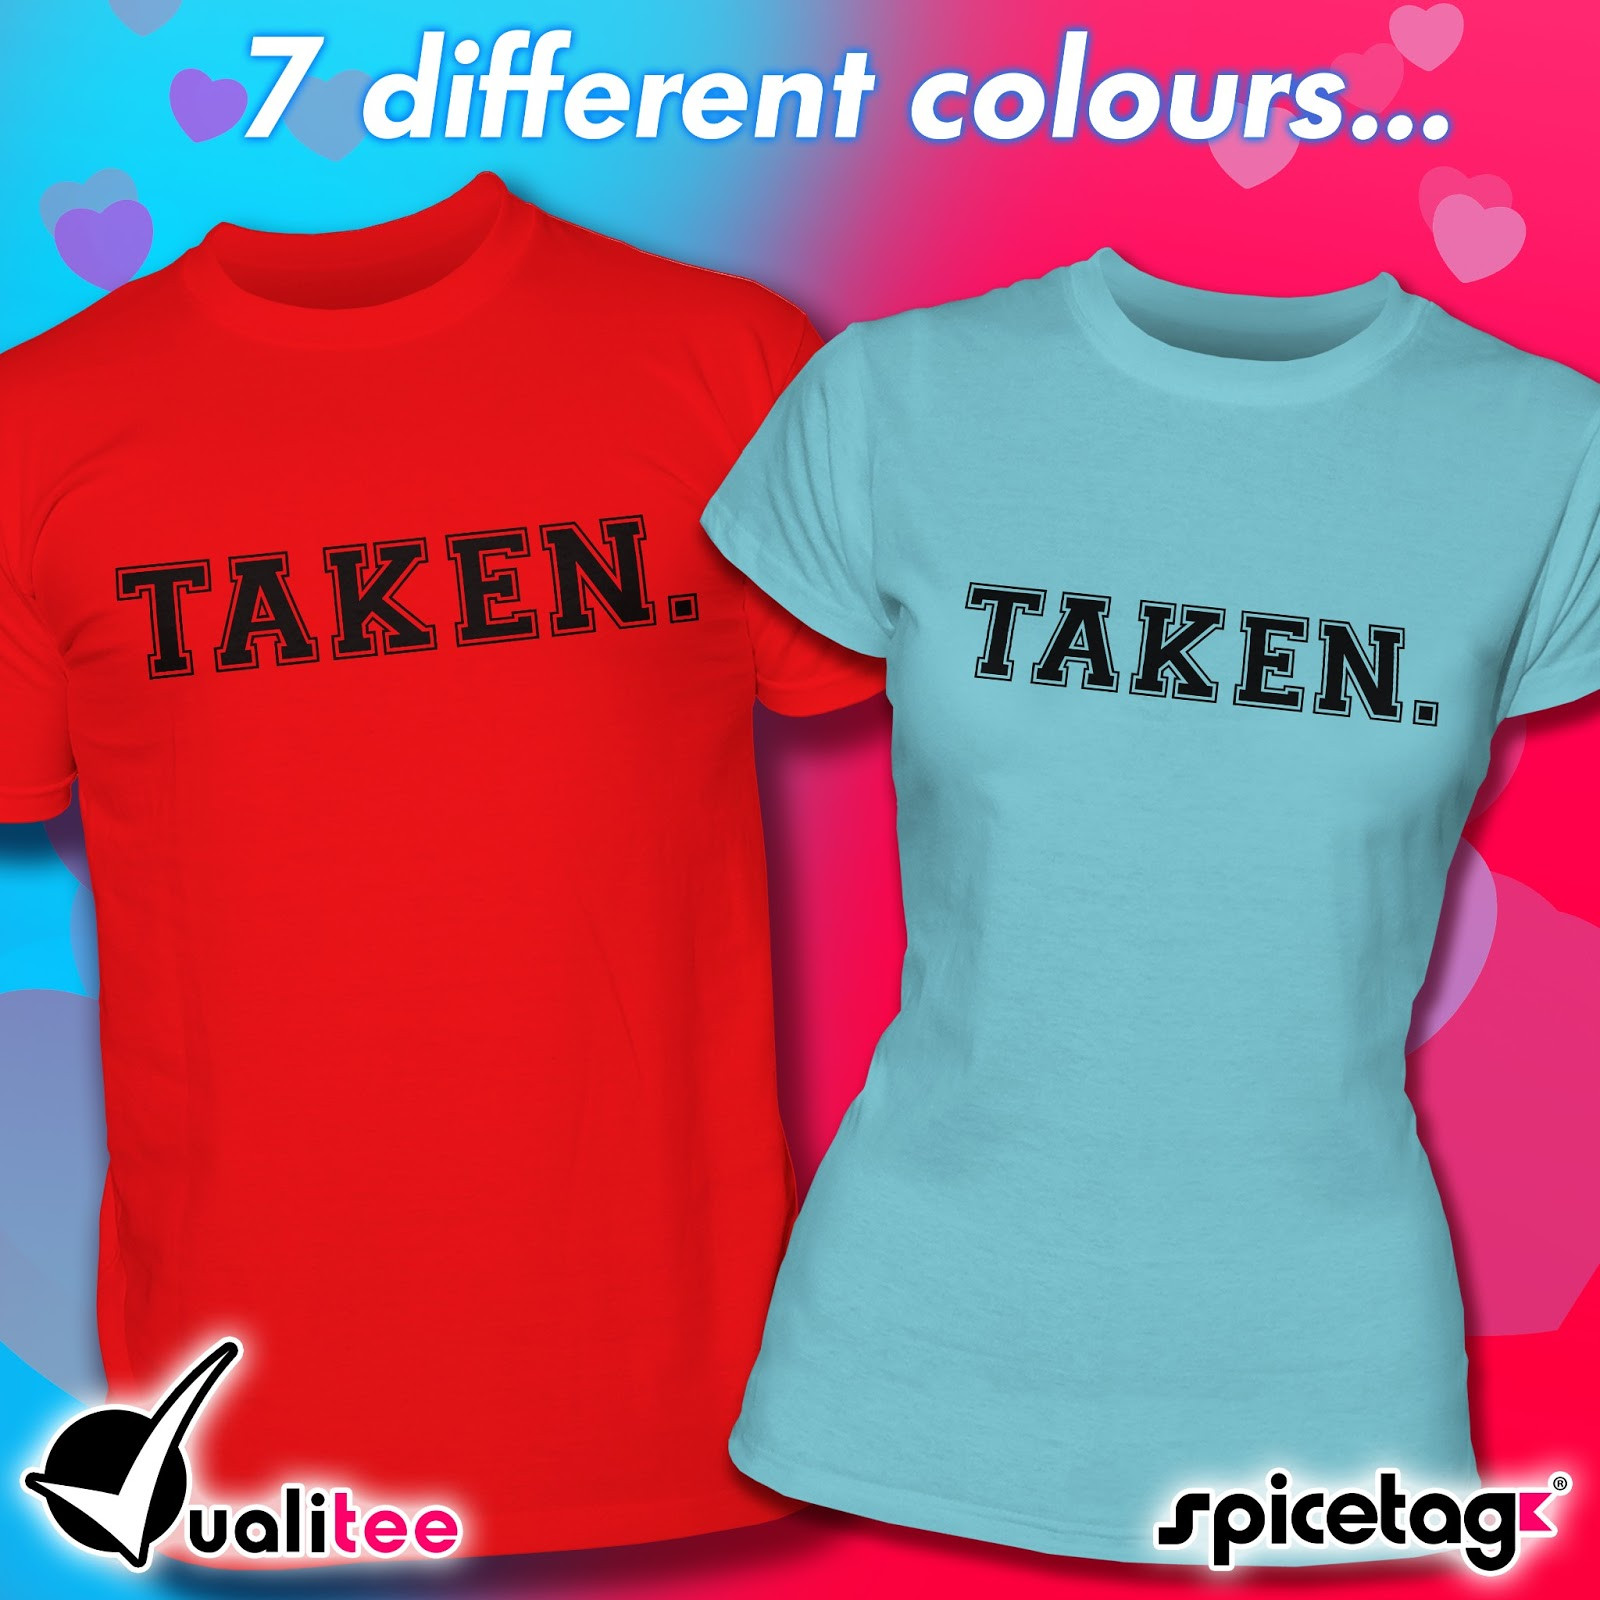 Valentines Day Shirt Ideas
 The Spicetag Blog Valentine s Day Love T shirts